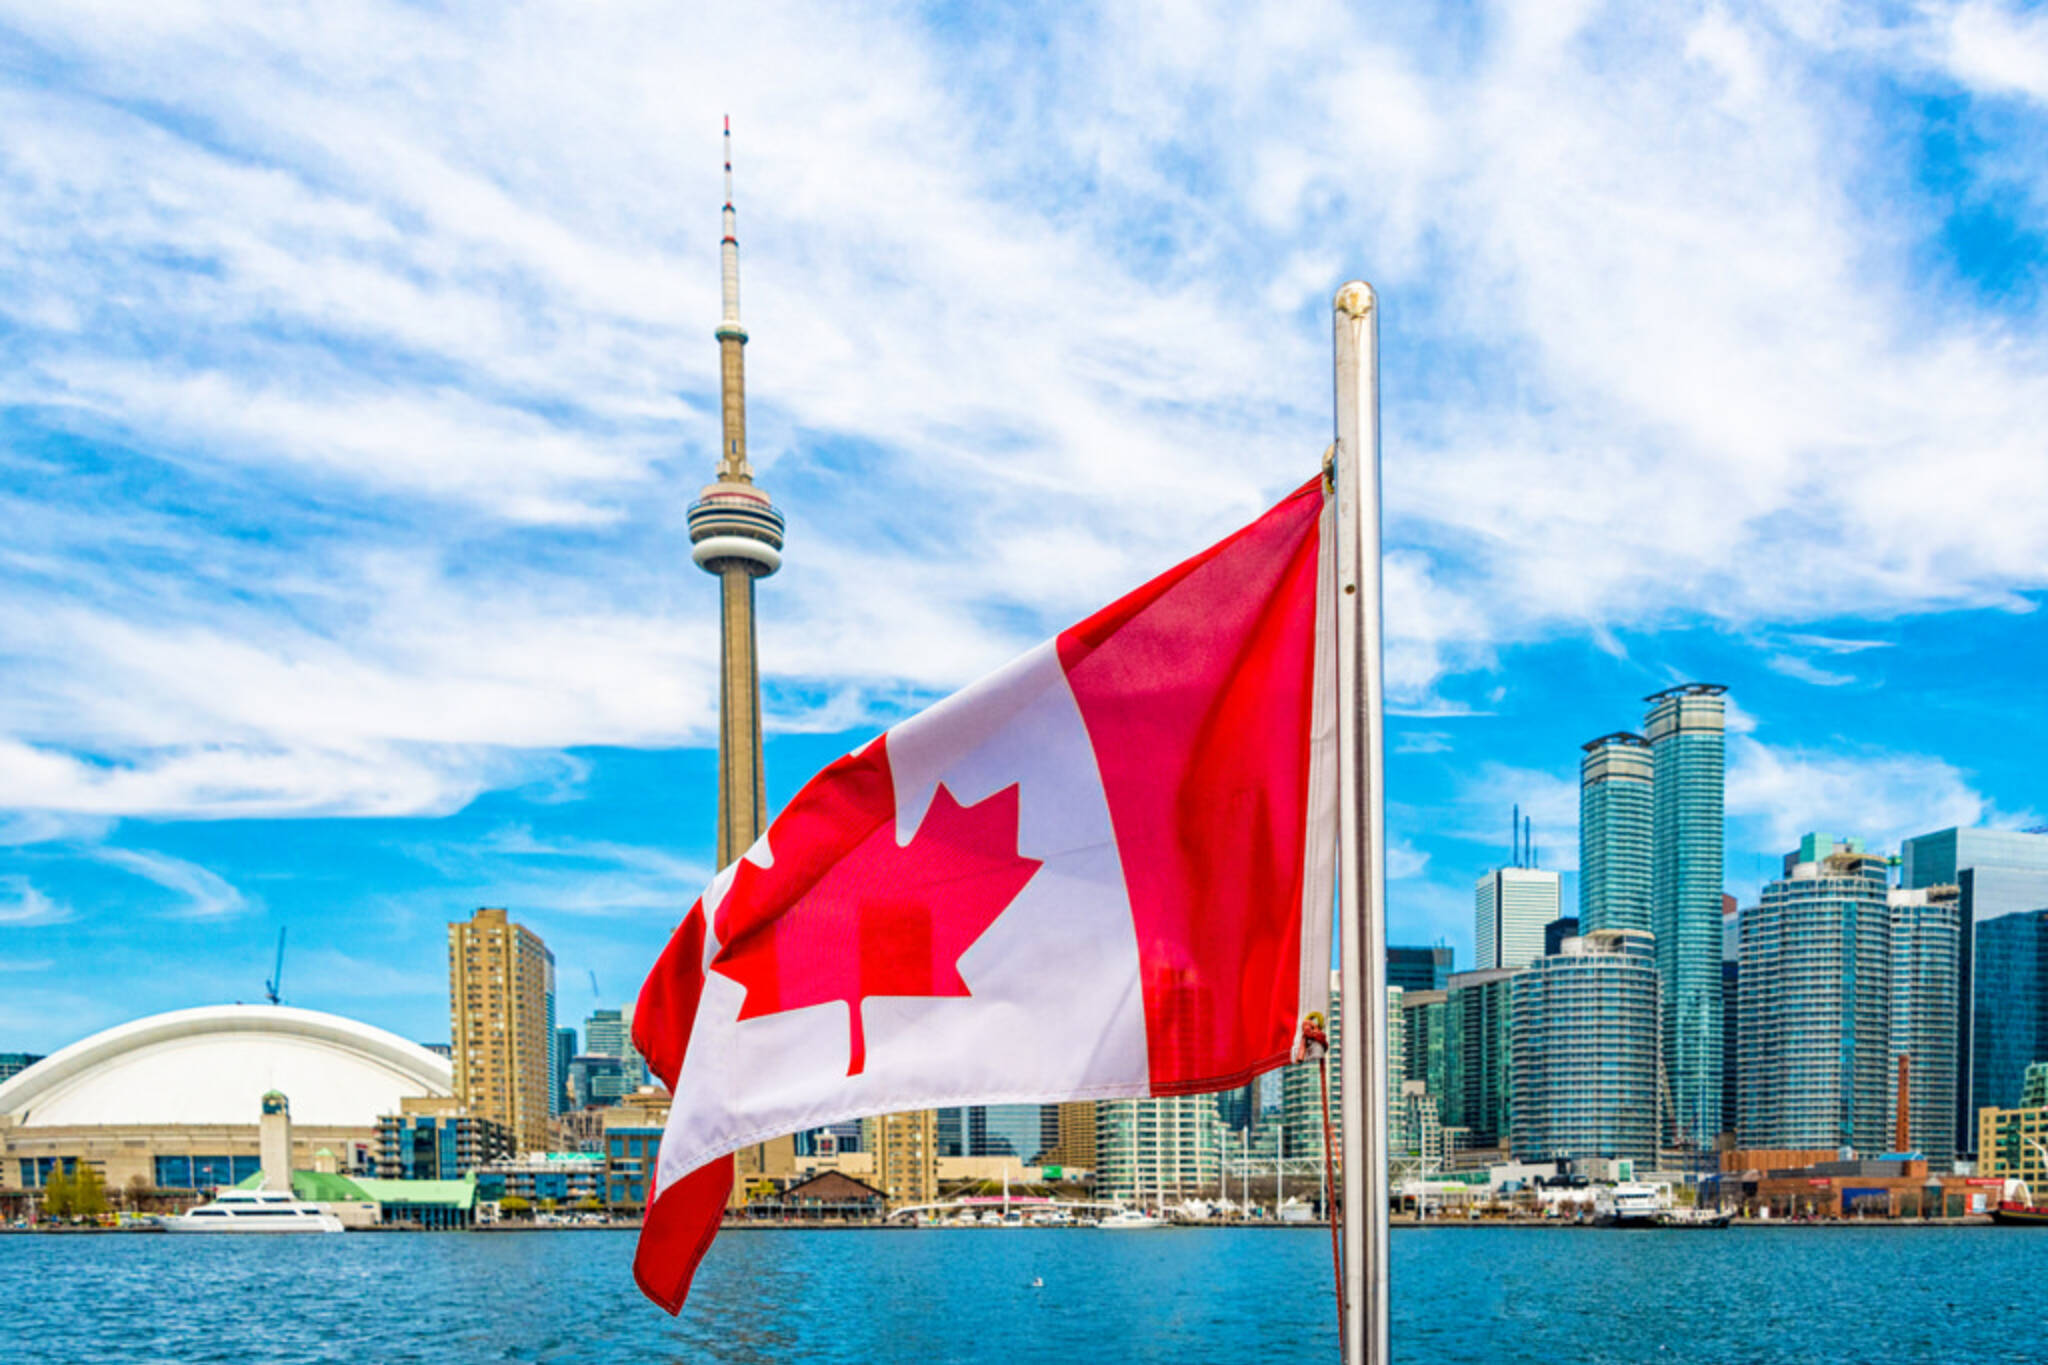 Part canada. Канада Торонто флаг. Столица Канады и флаг. Канада Оттава флаг. Торонто город в Канаде.